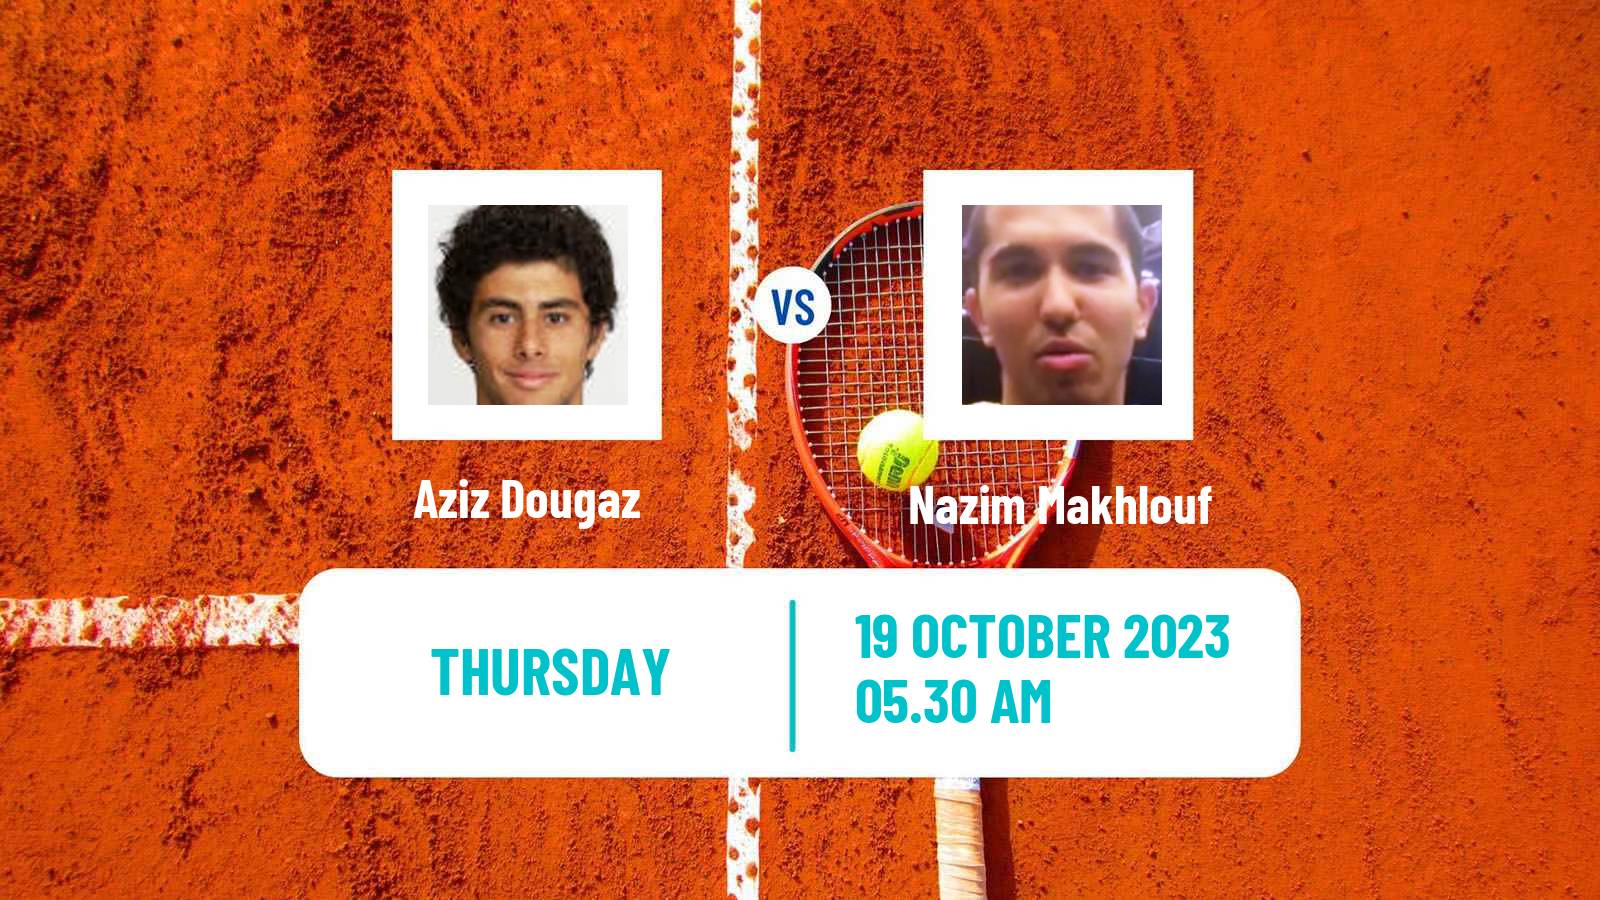 Tennis ITF M15 Monastir 42 Men Aziz Dougaz - Nazim Makhlouf